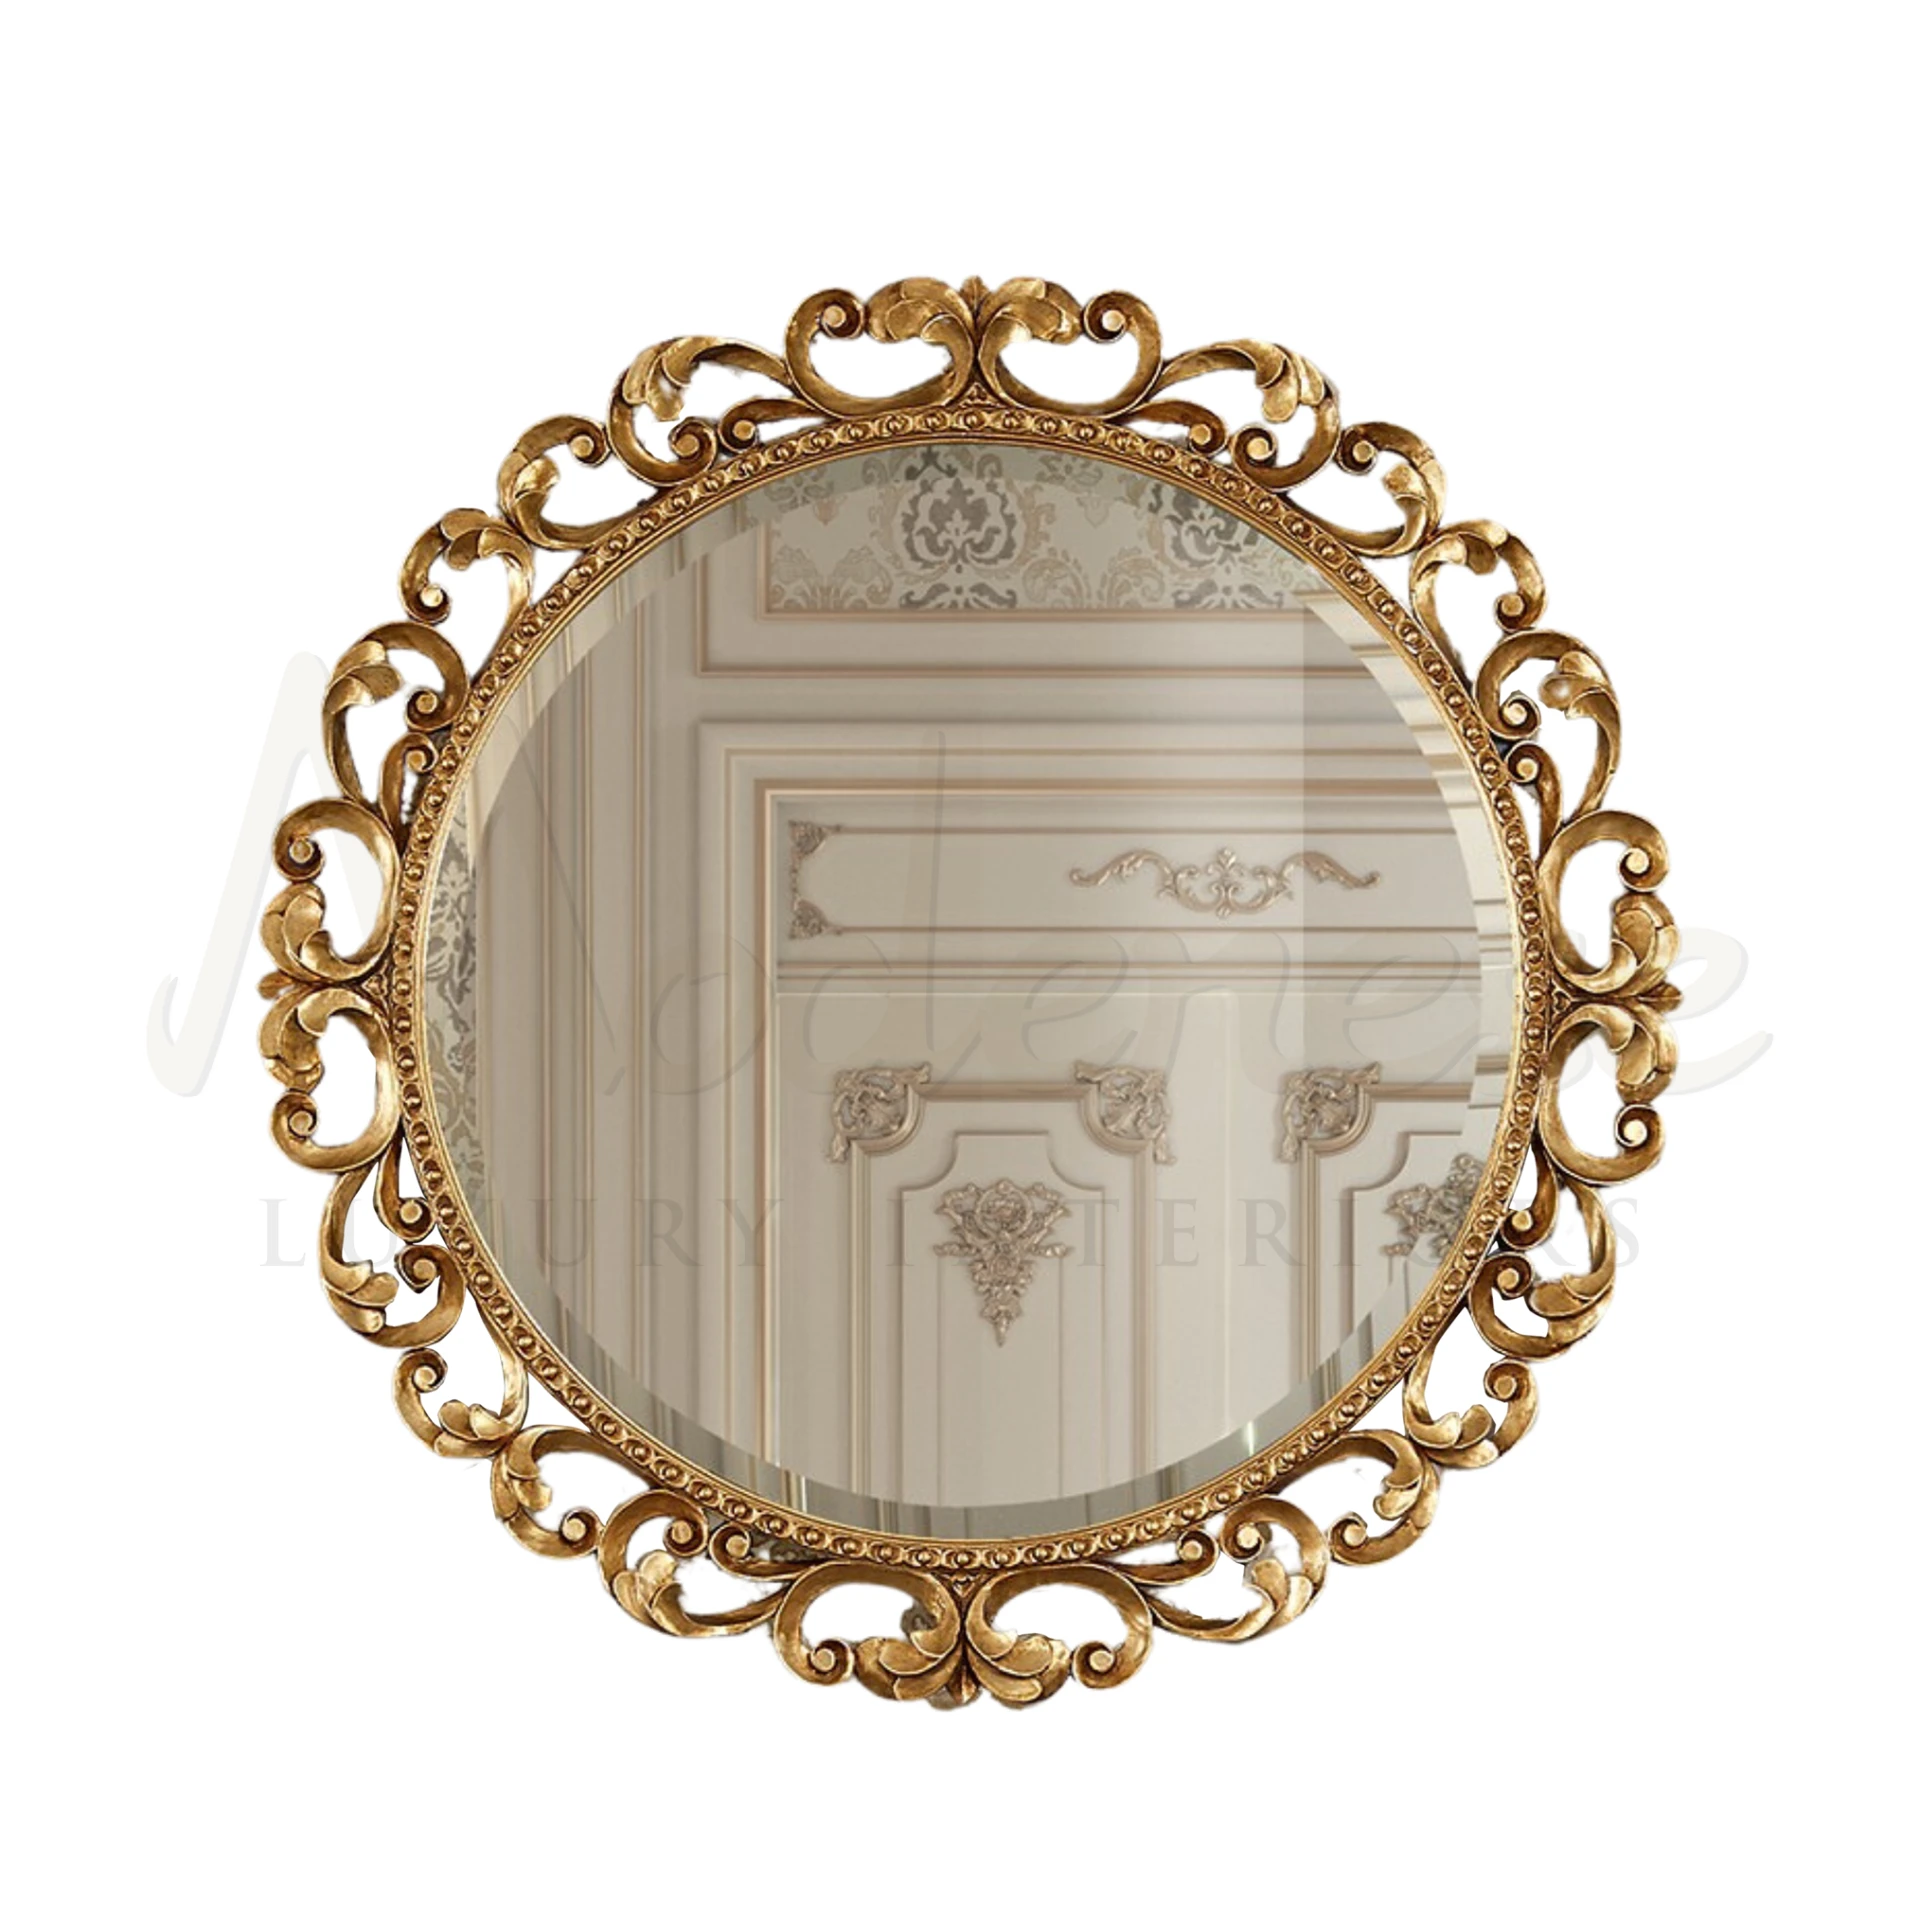 Round Gold Leaf Mirror, showcasing dedicated craftsmanship and baroque style, elevates luxury mirror design in home decor.